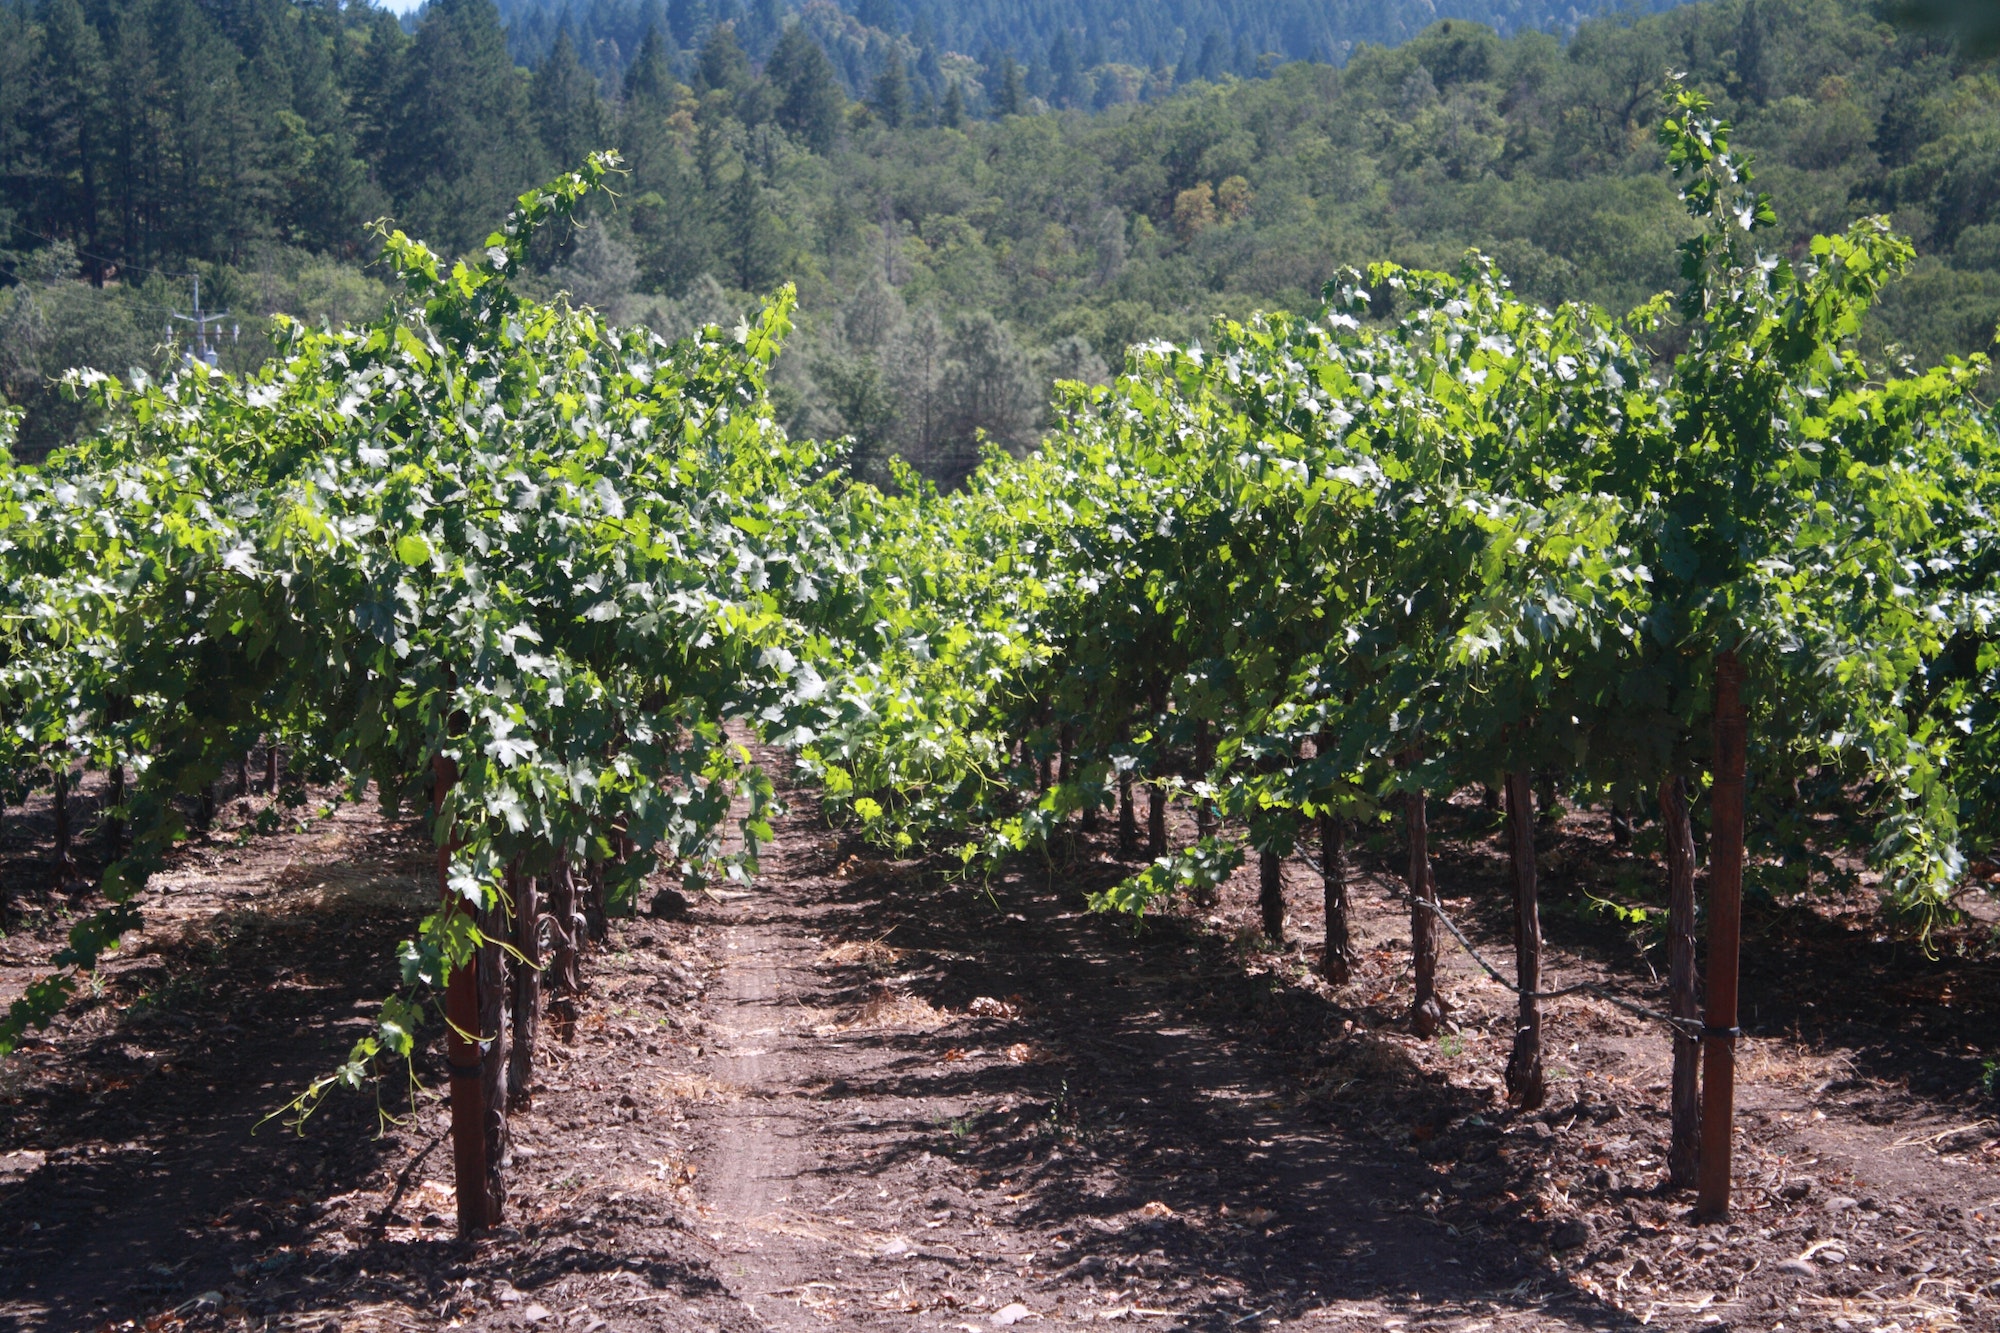 Vineyard in Napa valley